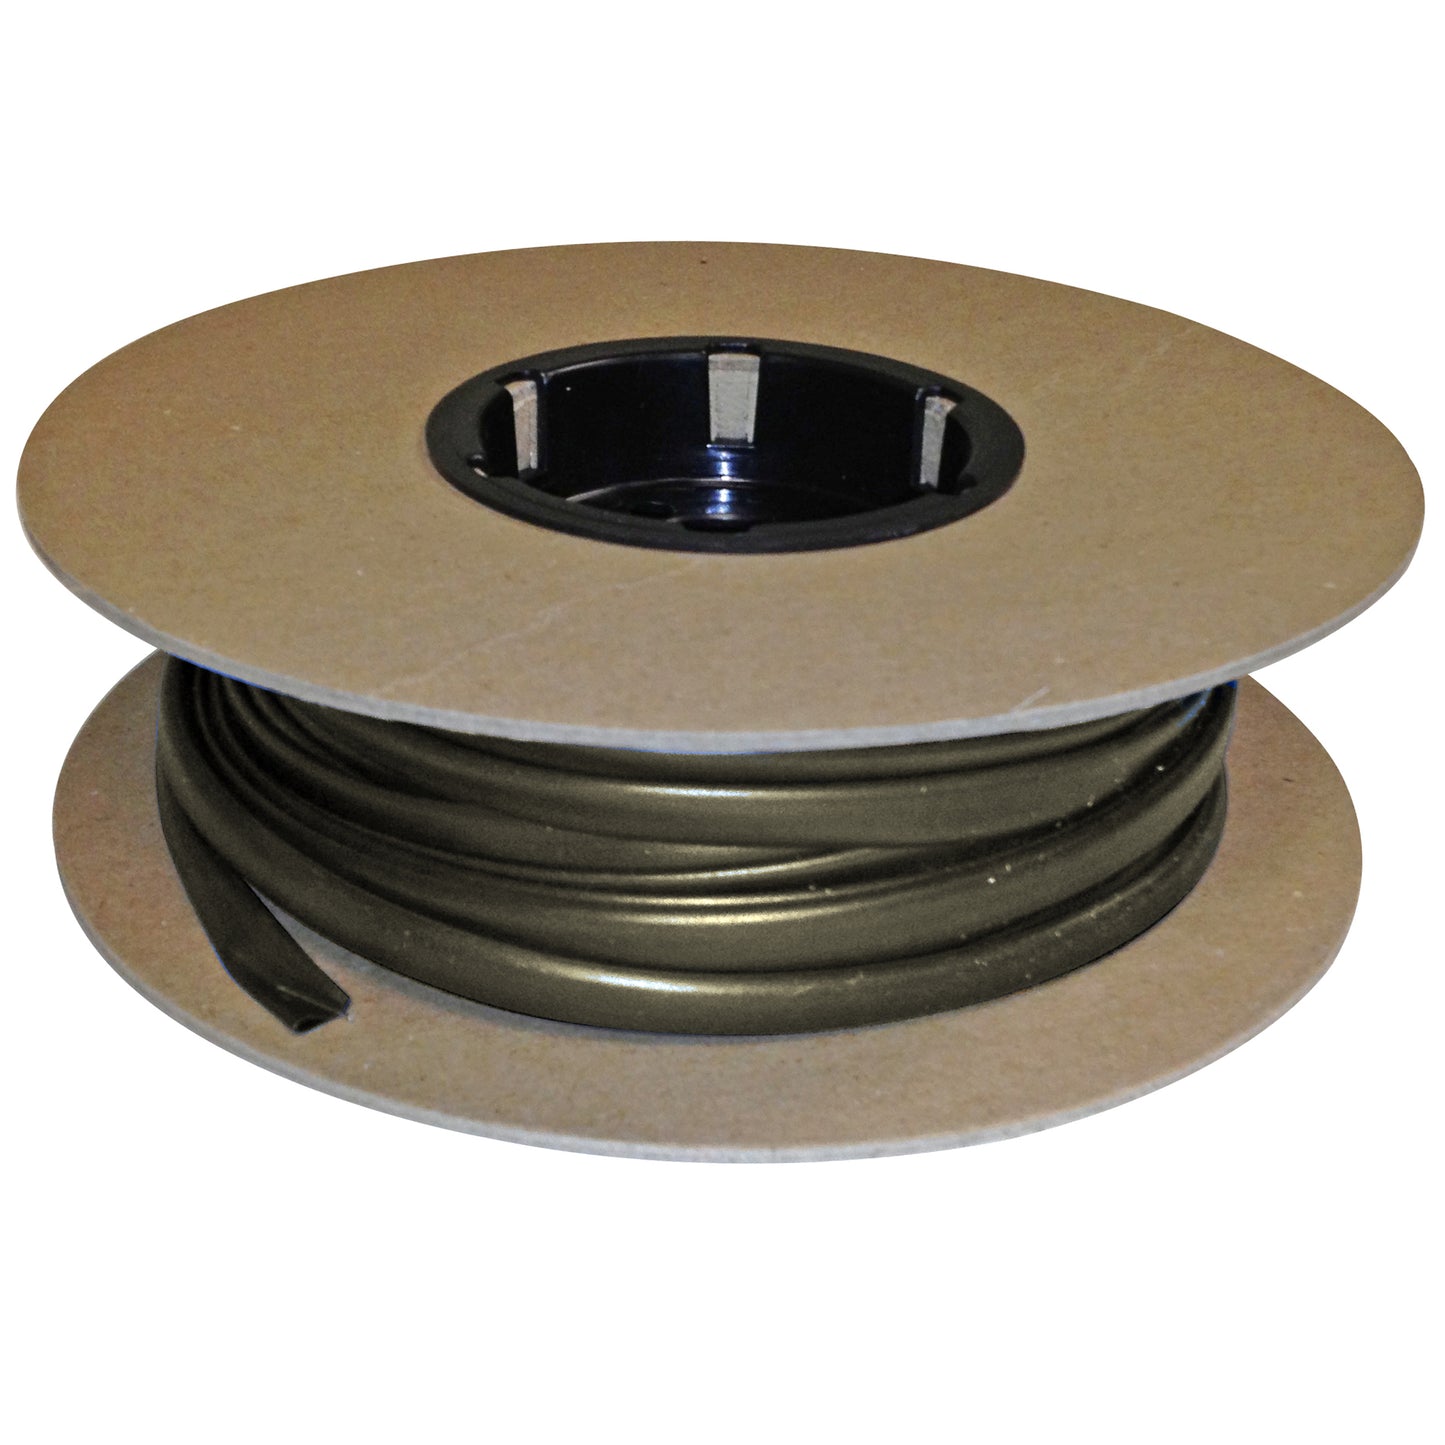 Flexible Thin Single Wall Non-Adhesive Heat Shrink Tubing 2:1 Black 1/2" ID - 100' Ft Spool